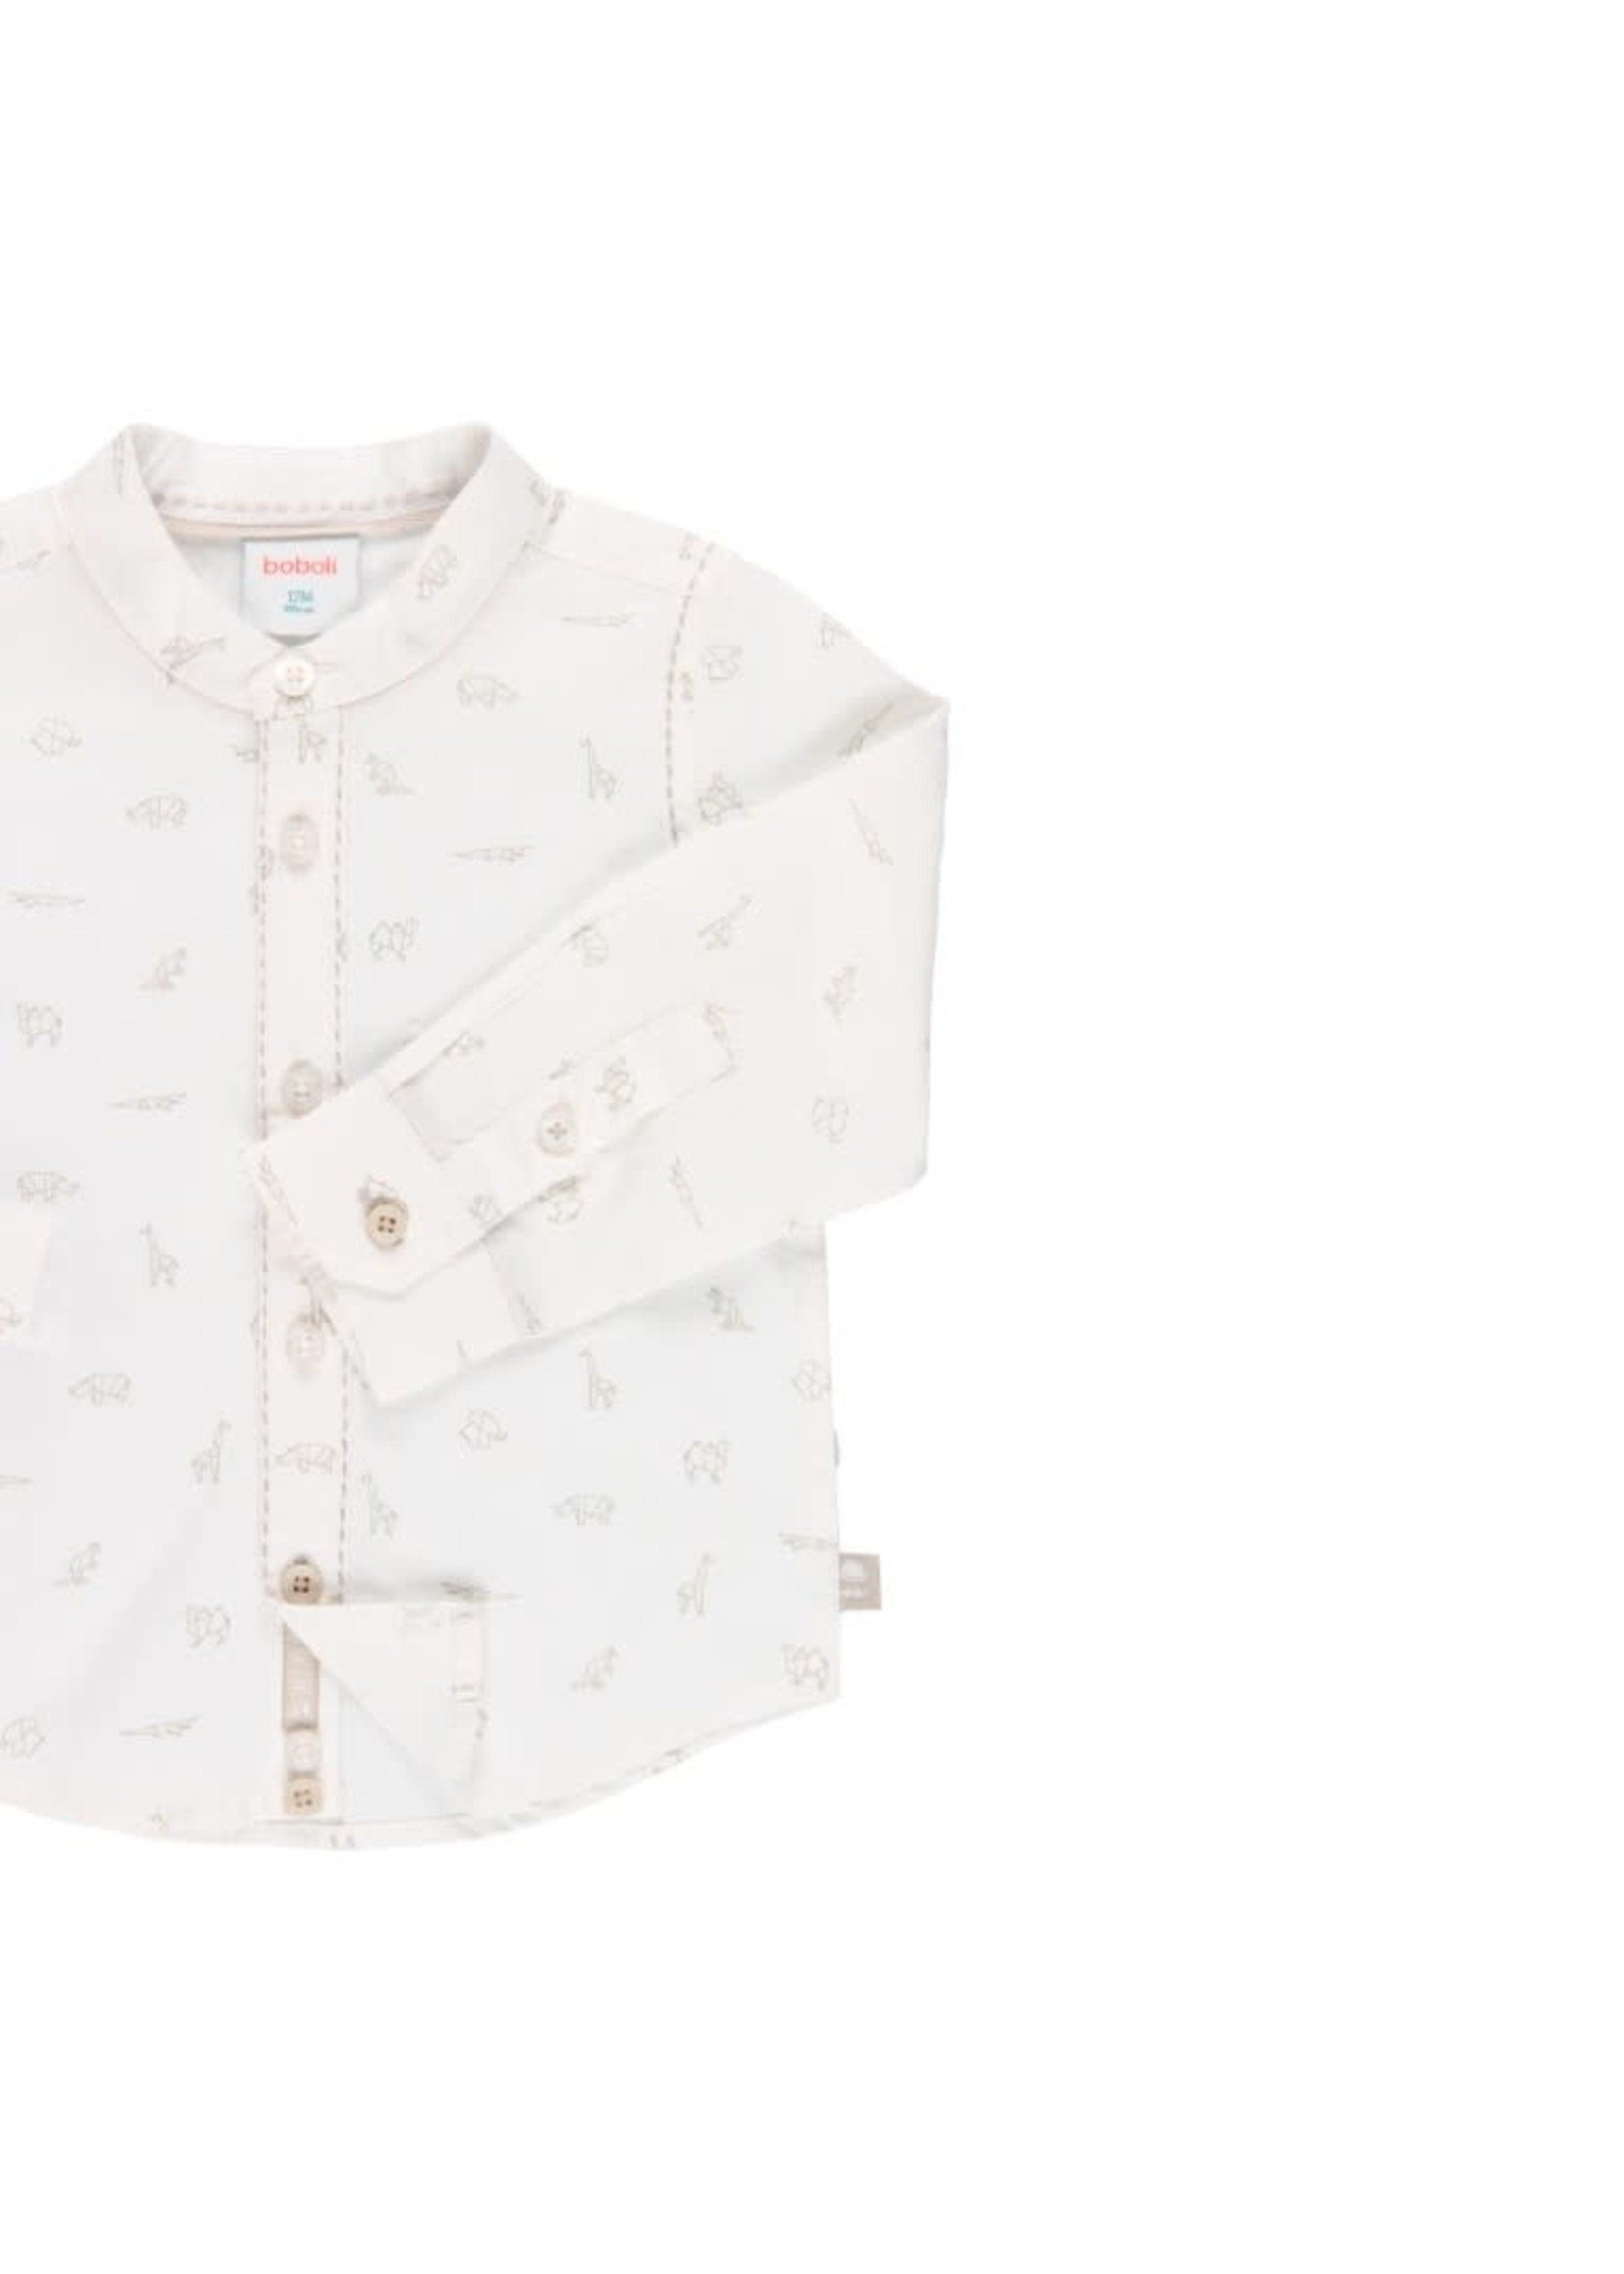 Boboli Poplin shirt "animals" for baby boy print 714035